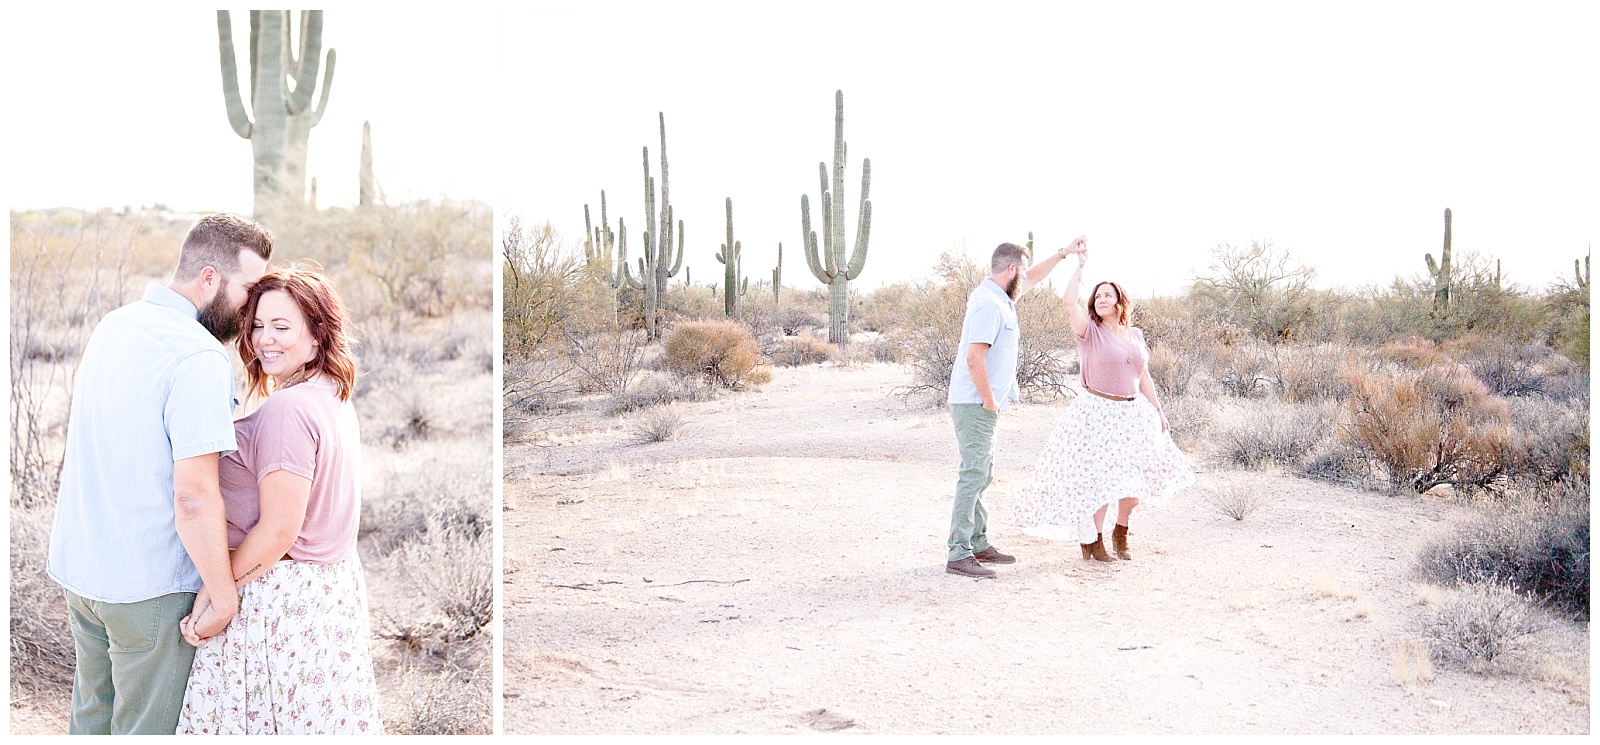 Josh & Samantha - 5 year anniversary - Scottsdale Desert Session